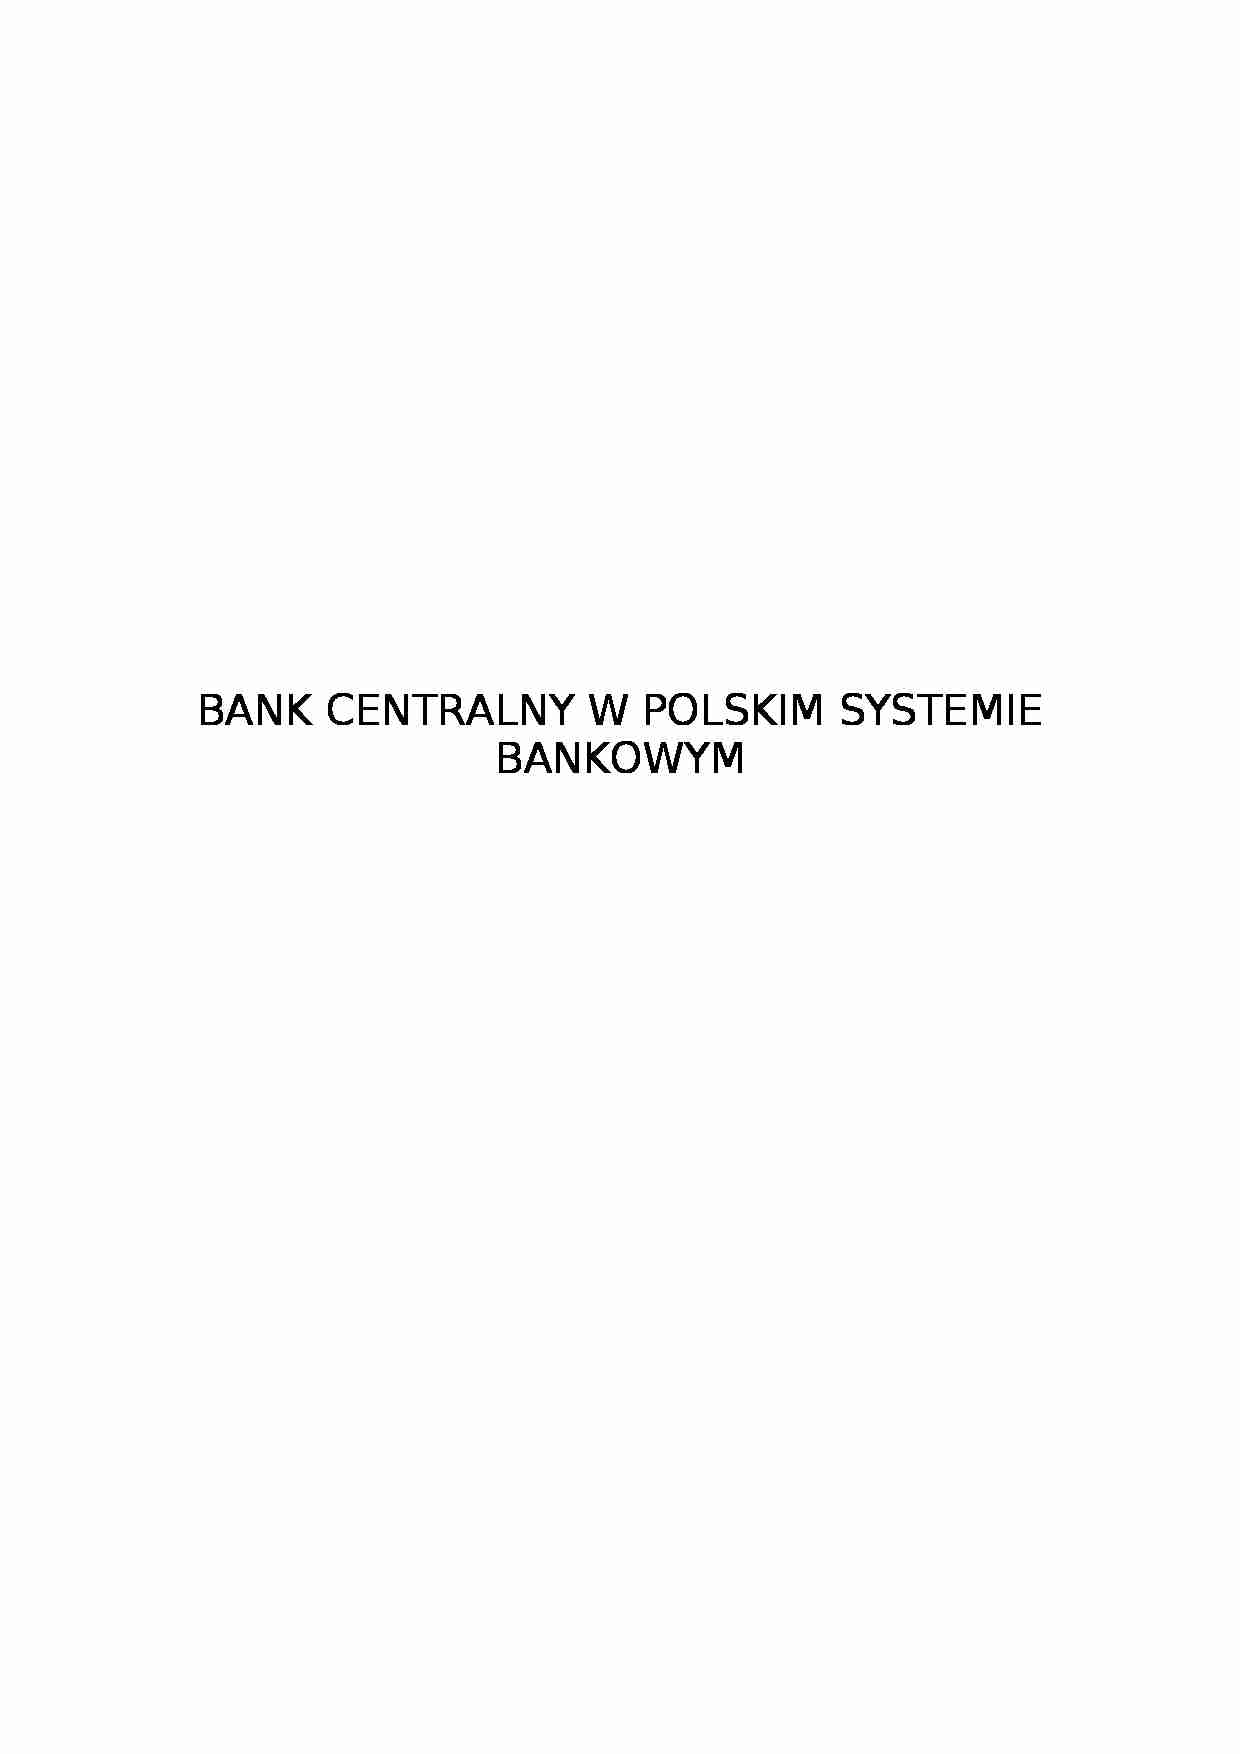 bankowość - bank centralny - Prezes NBP - strona 1